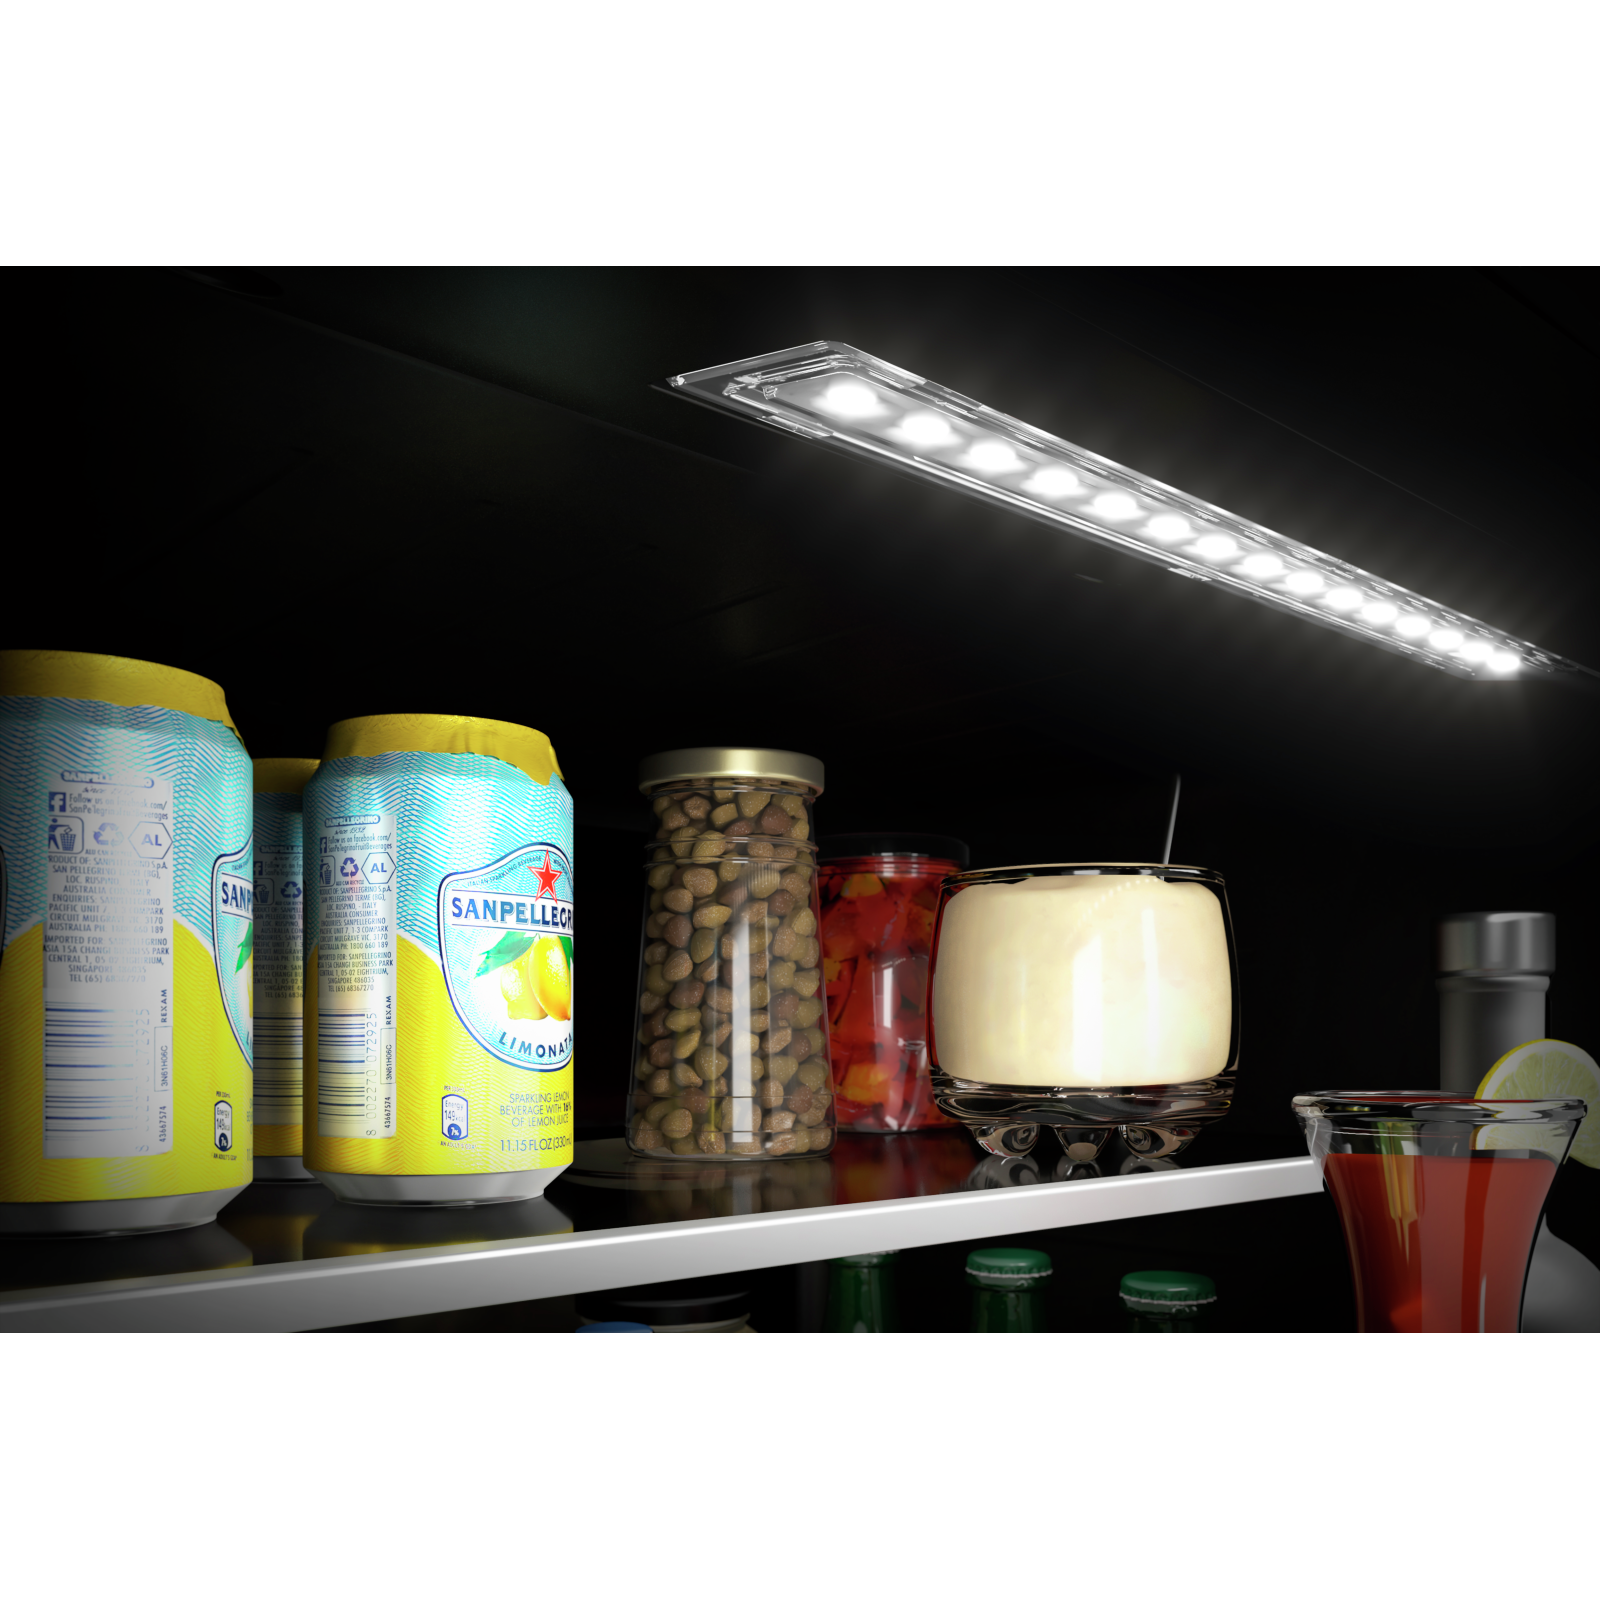 KitchenAid - 23.875 Inch 4.89 cu. ft Beverage Centre Refrigerator in Stainless - KUBR314KSS